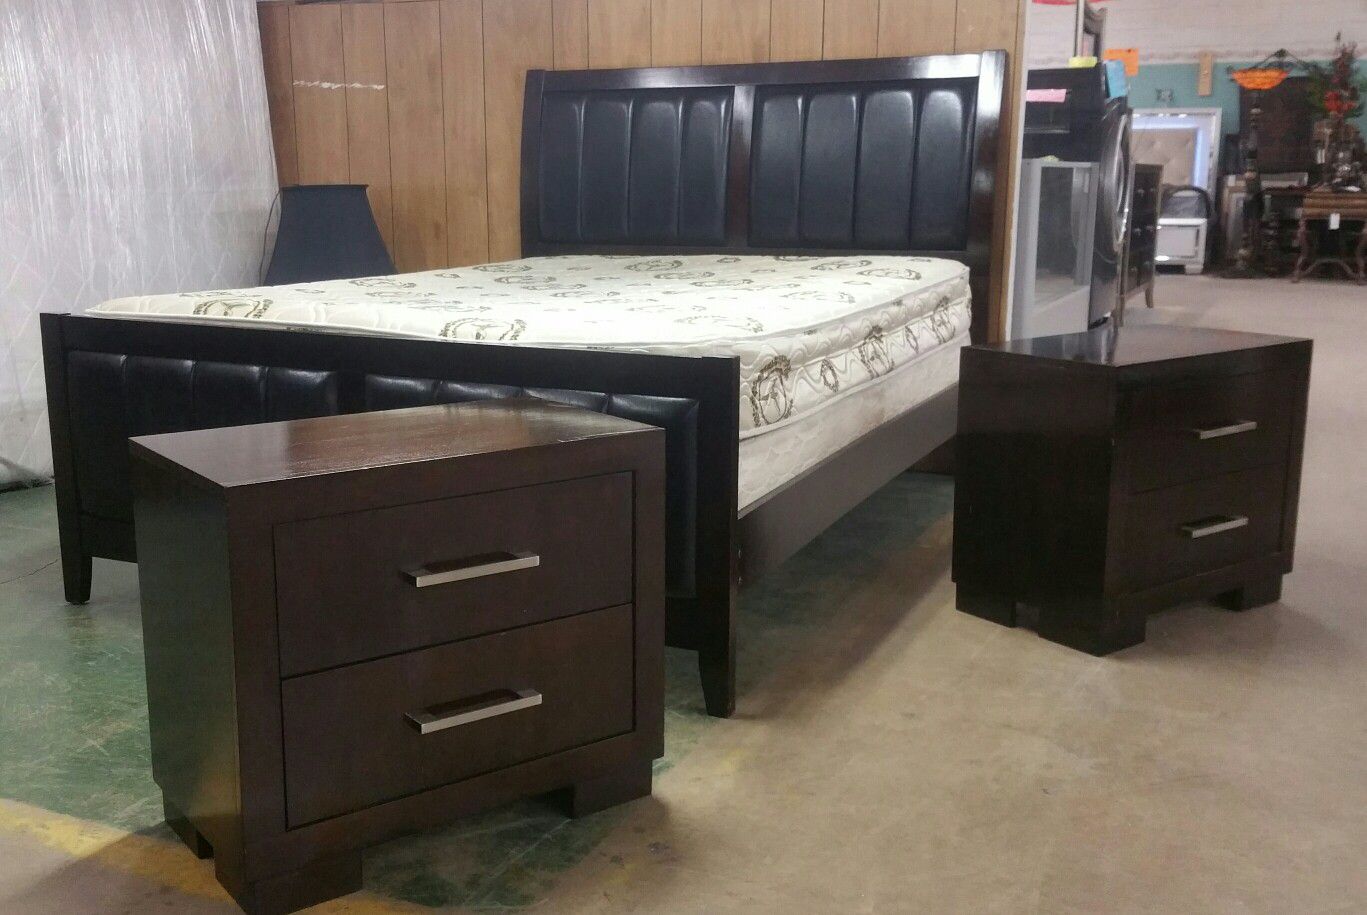 Queen bed frame and 2 nightstands